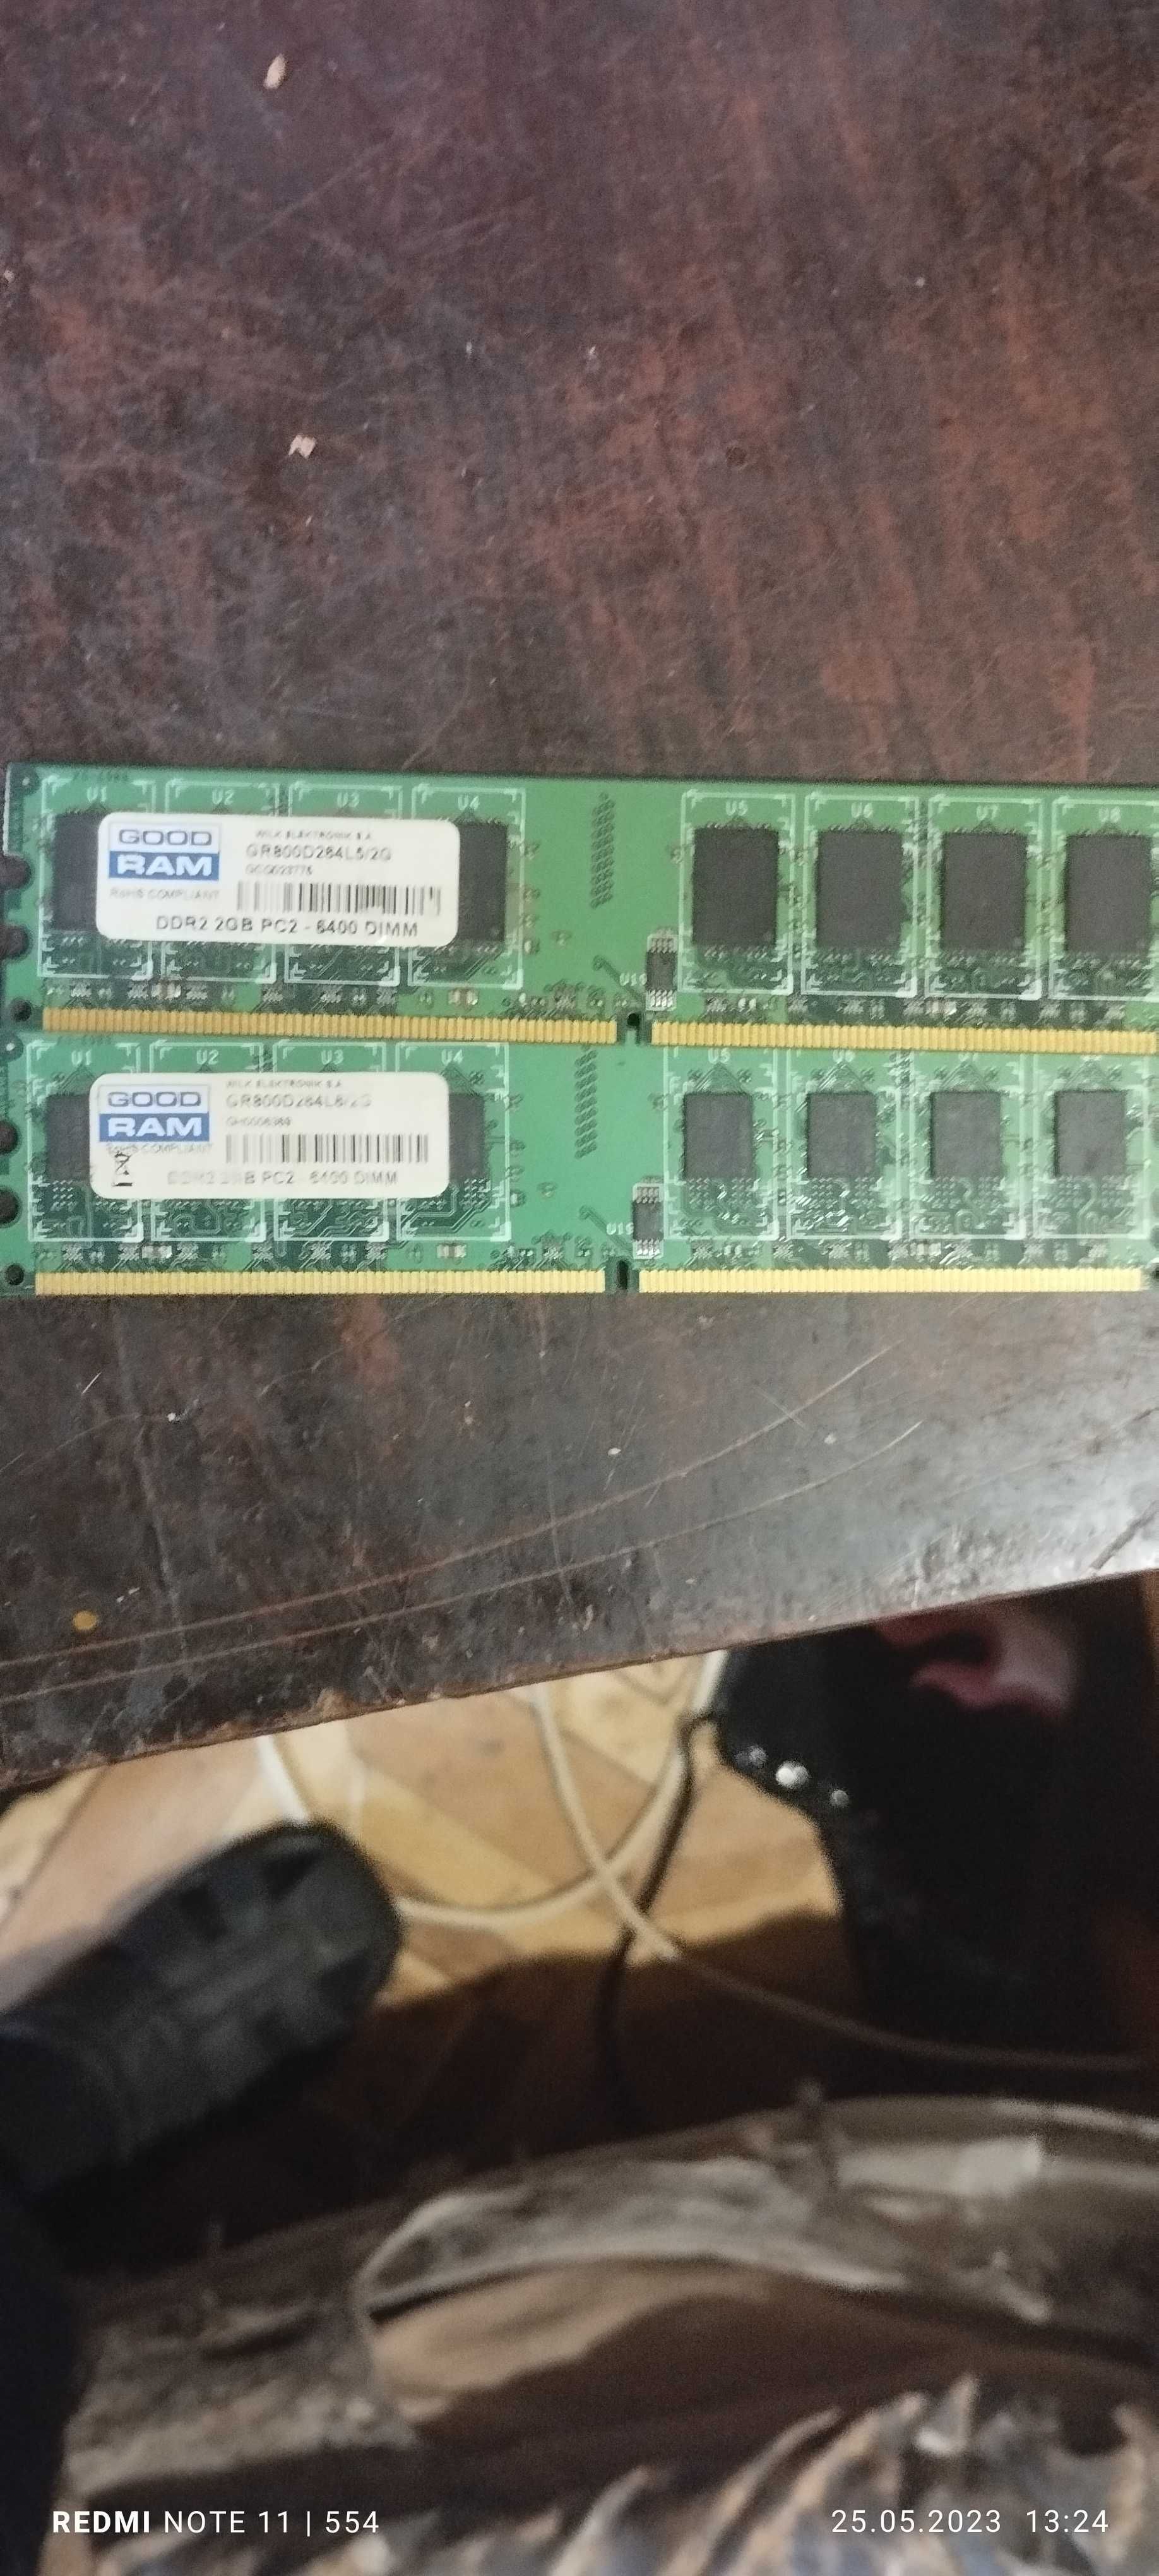 GOOD RAM 2gb 6400DMI